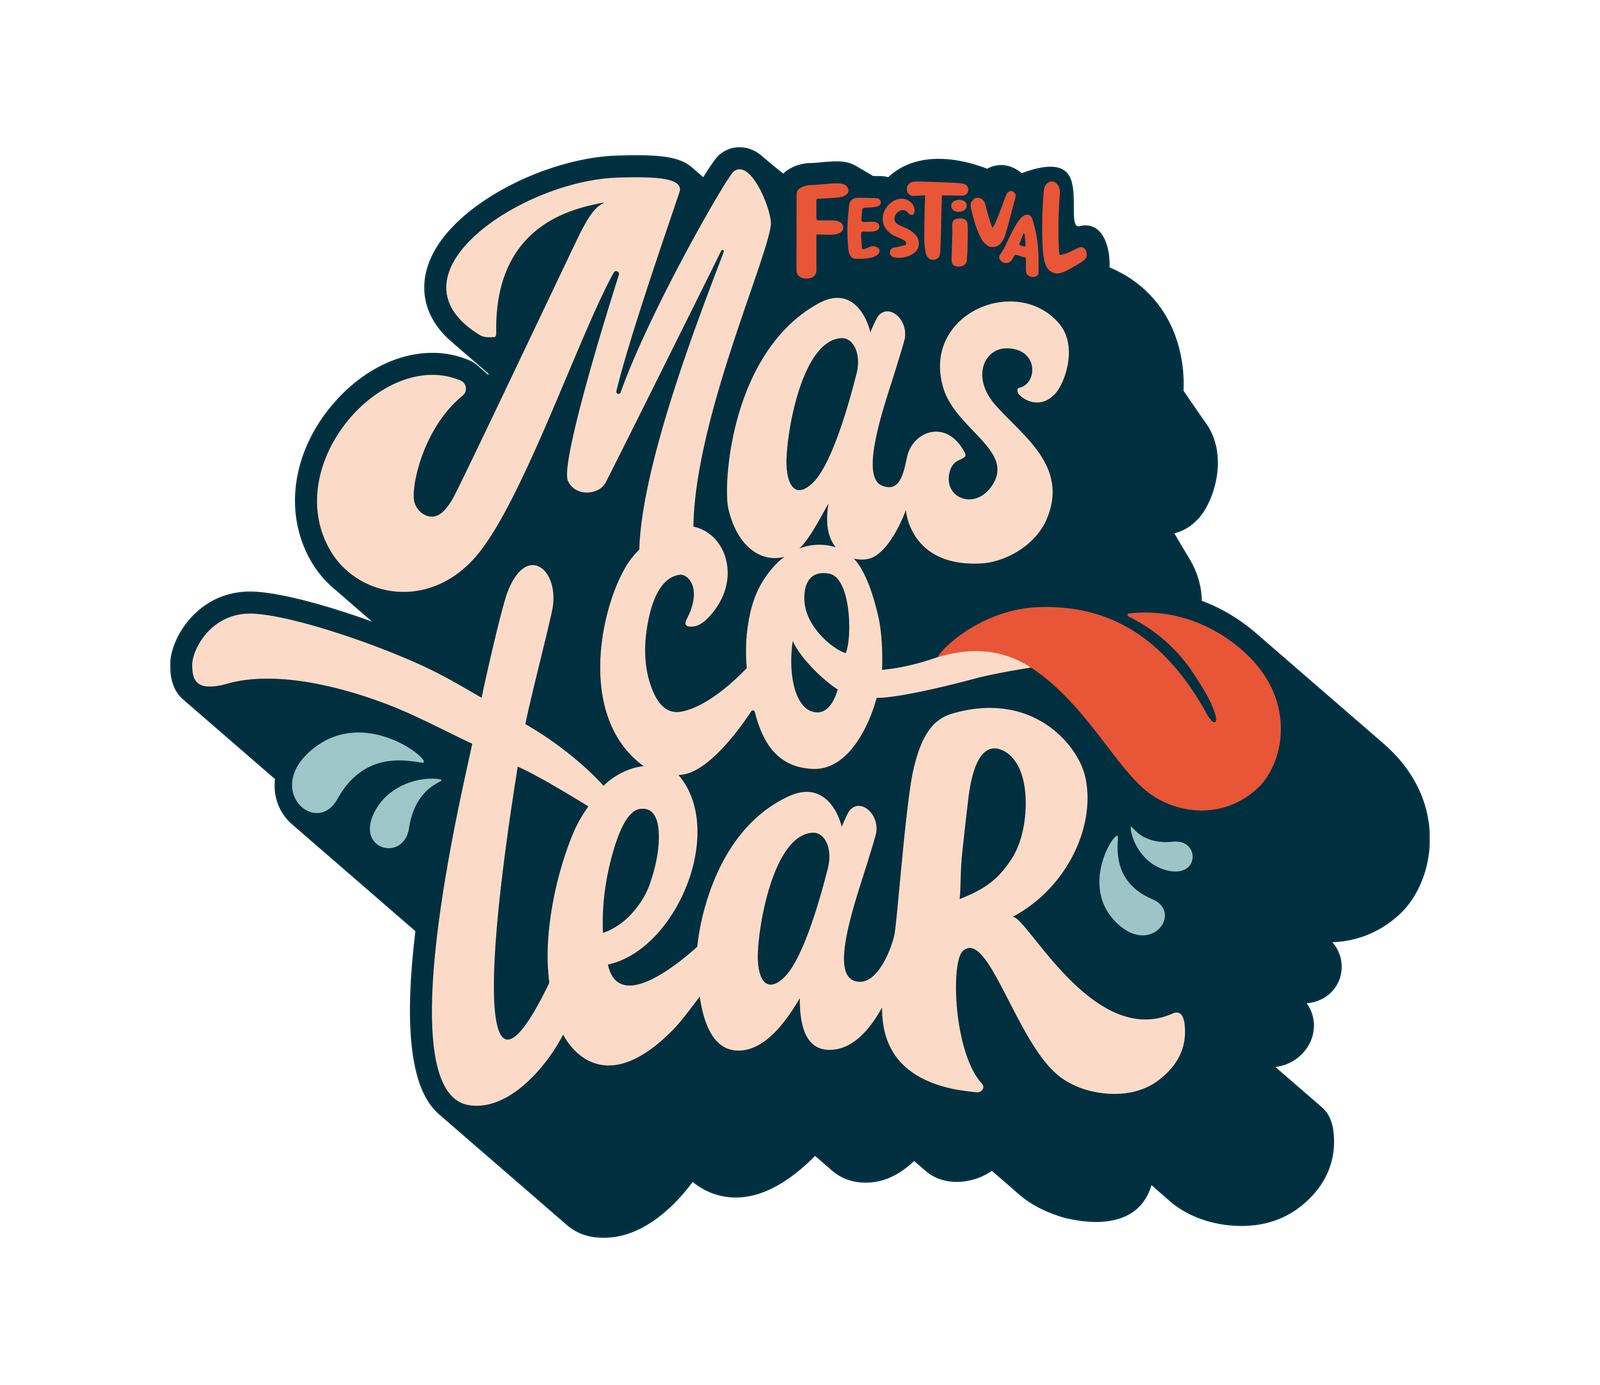 Festival Mascotear